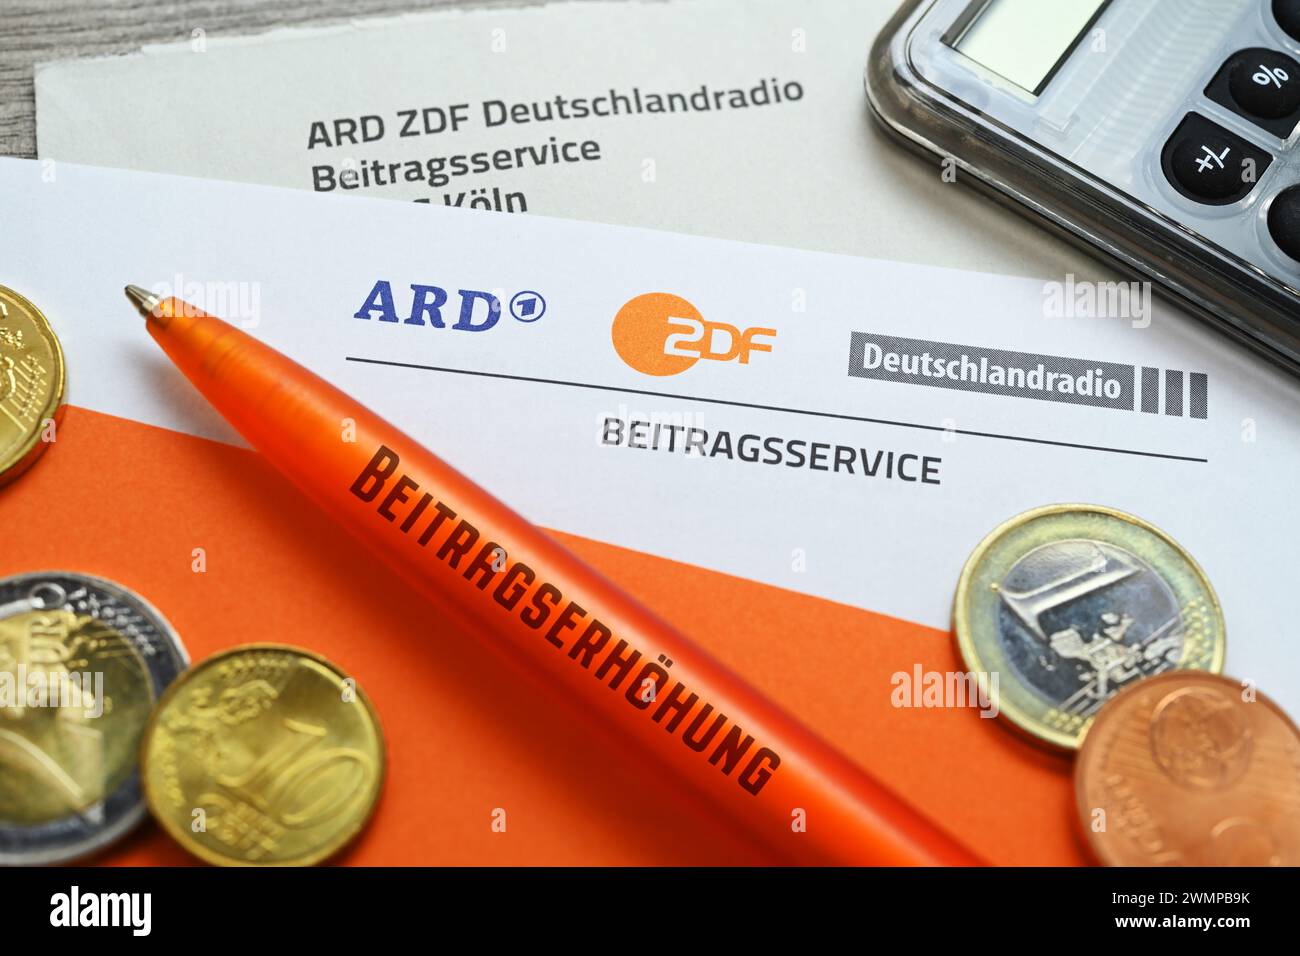 Lettera dell'ARD ZDF Deutschlandradio Beitragsservice e Ballpoint Pen con l'iscrizione "Beitragerhöhung", foto simbolica "Erhöhung Des Rundfu Foto Stock